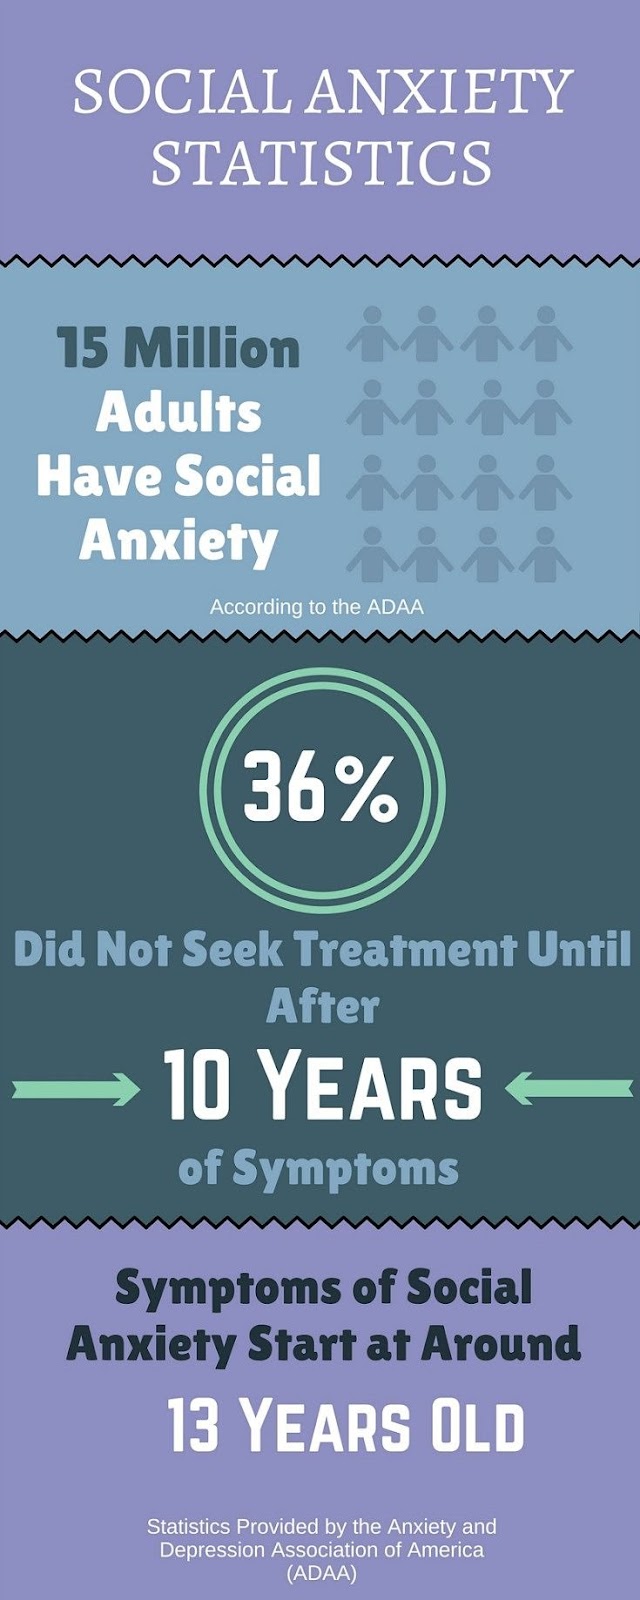 socialanxietystats-infographic_opt